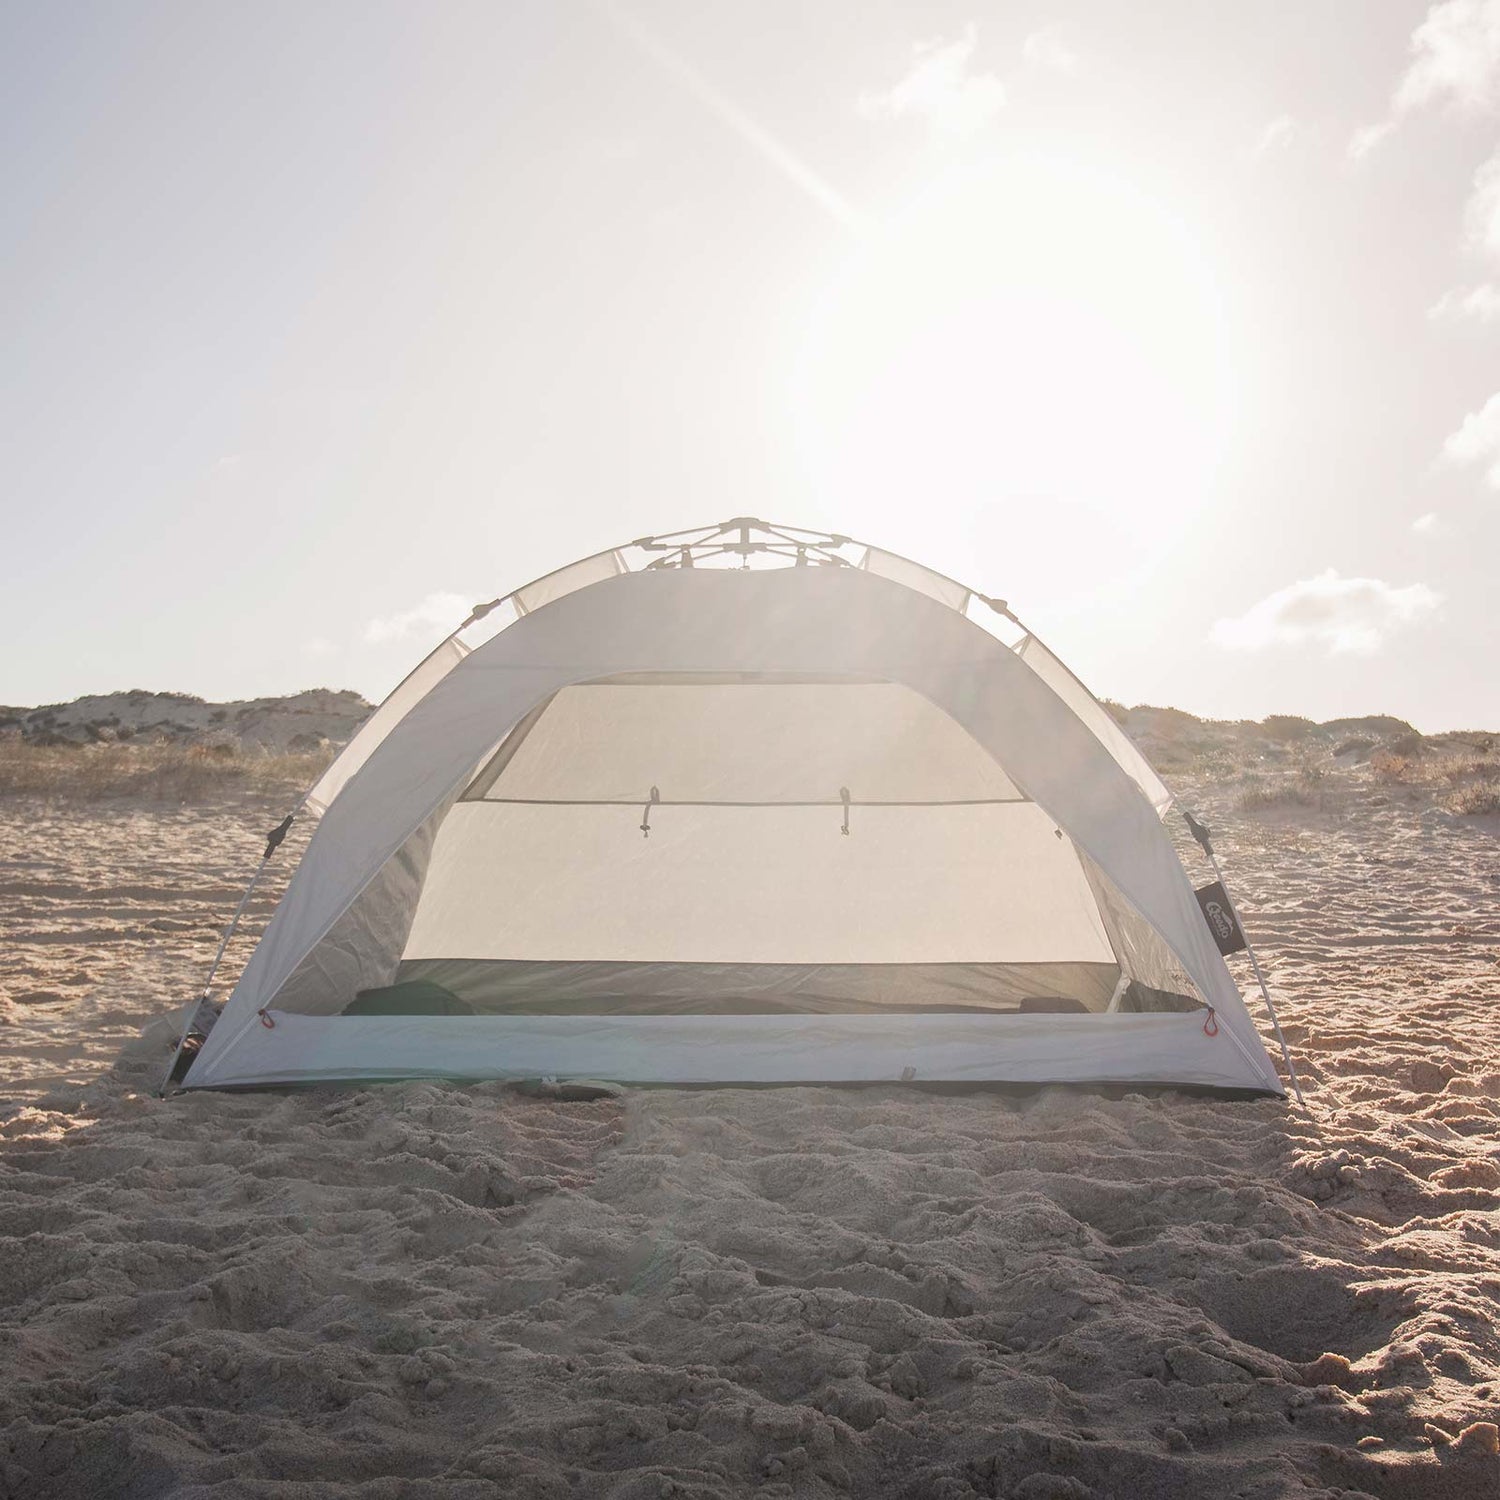 qeedo Quick Palm, quickly erected beach tent